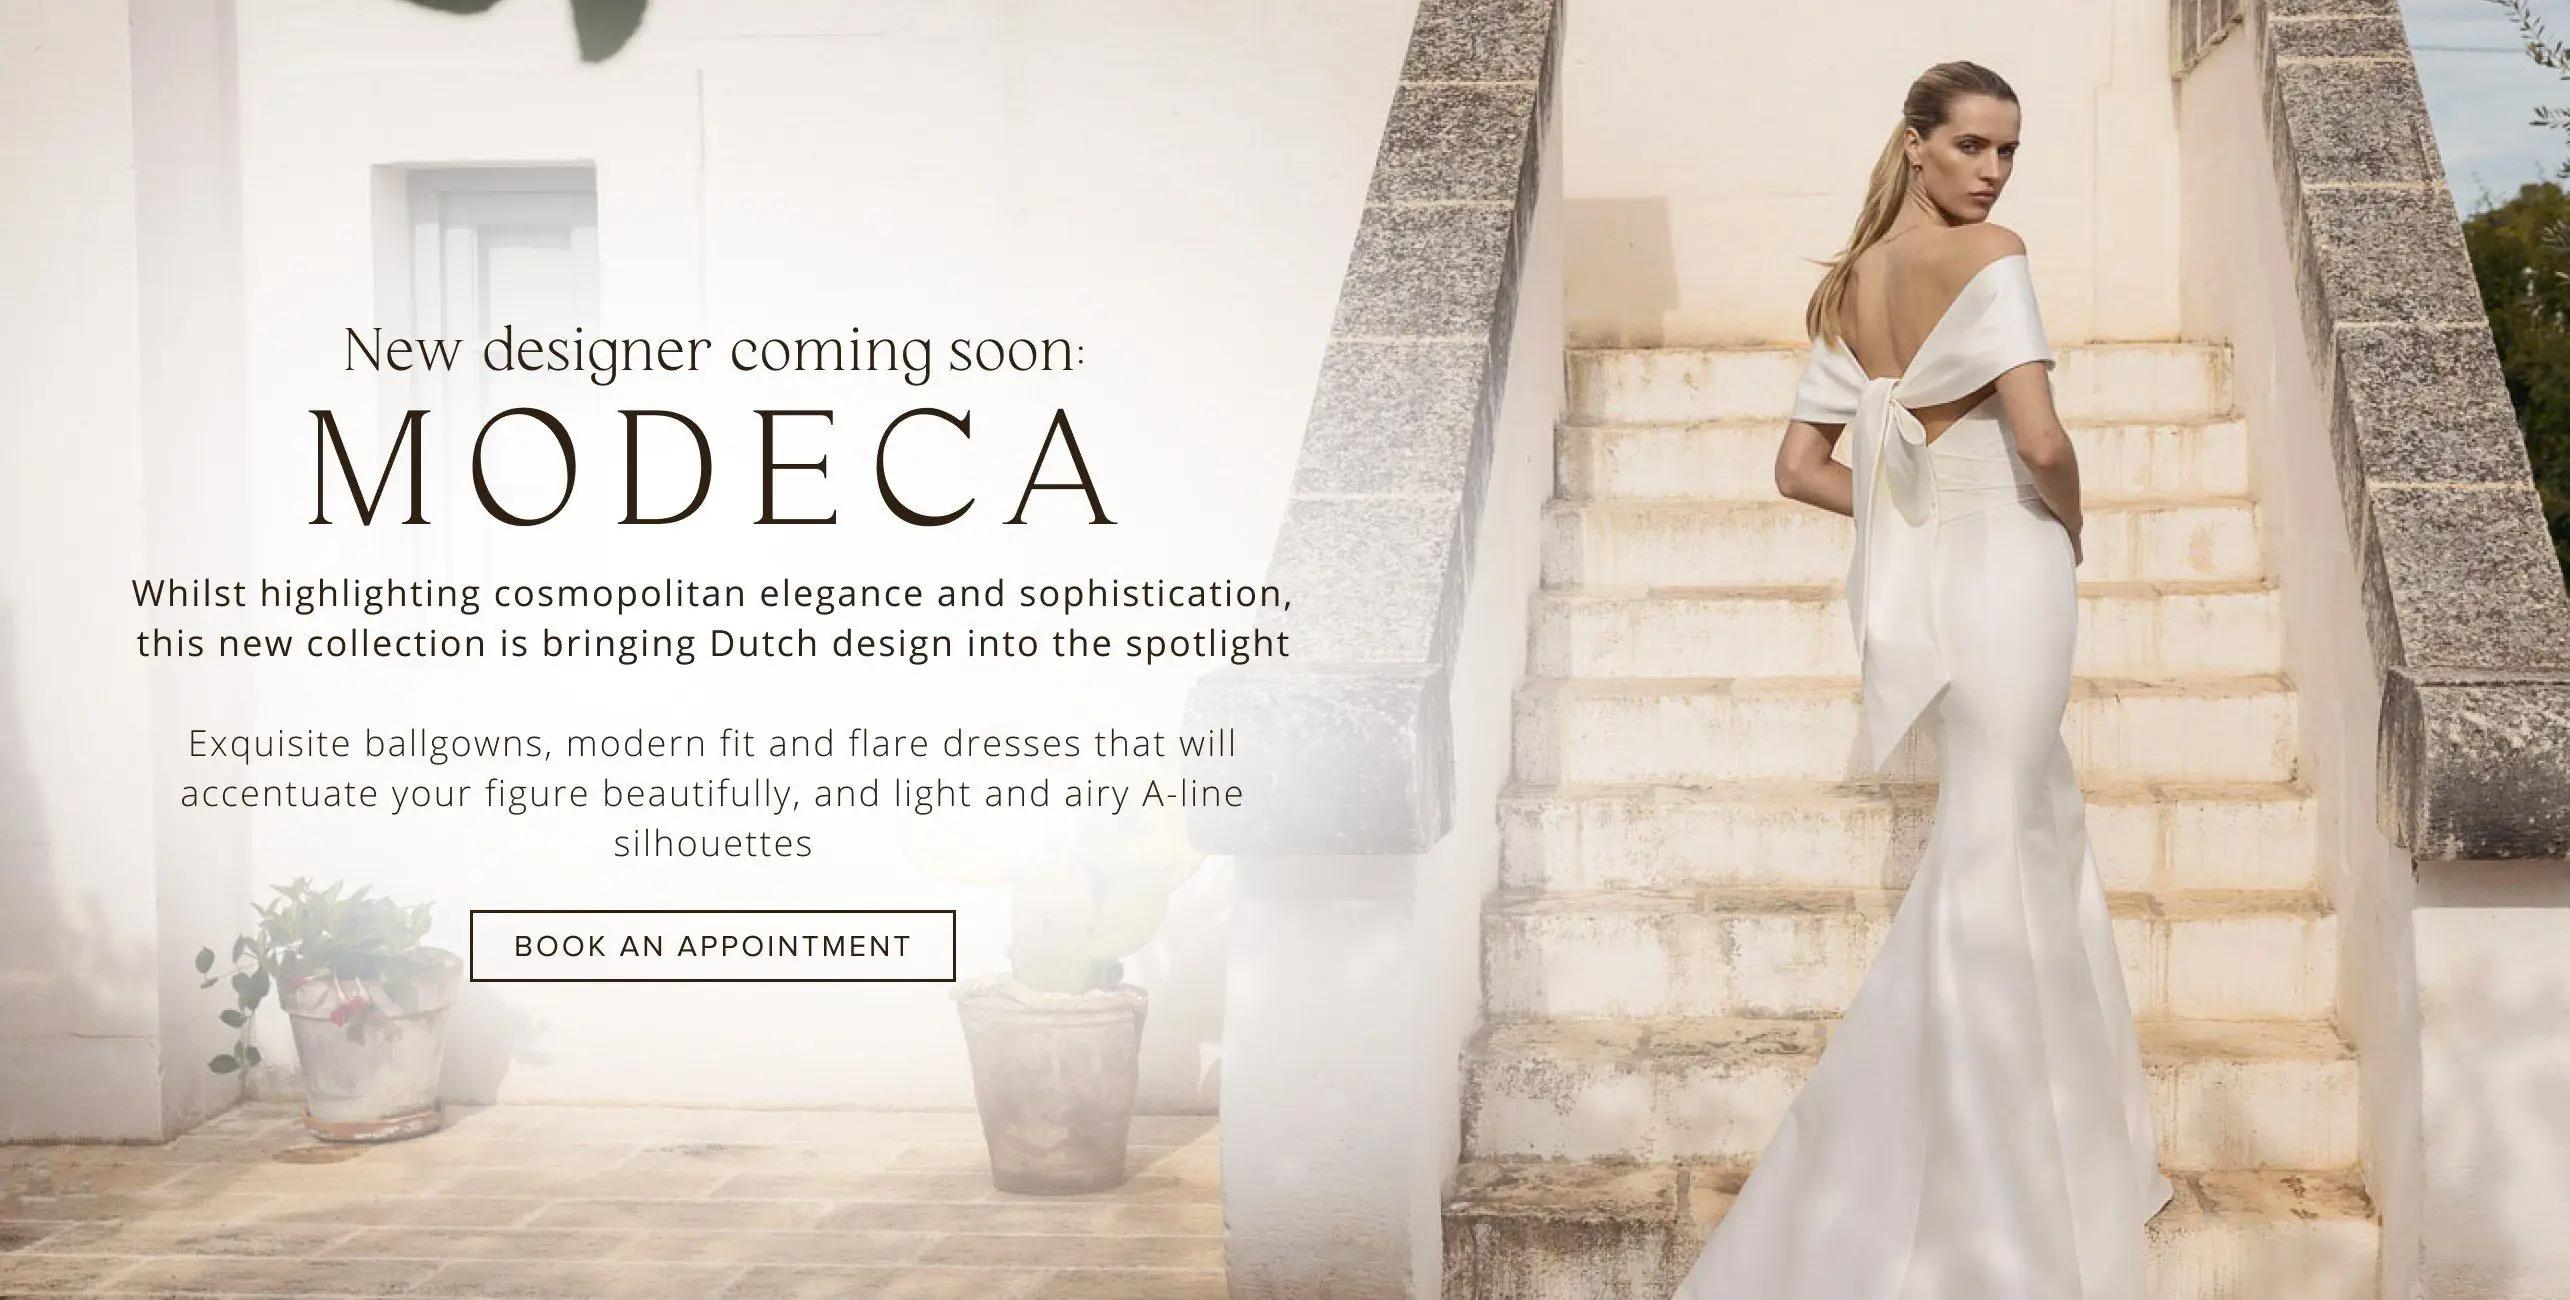 Brides by Solo New Designer Modeca banner desktop